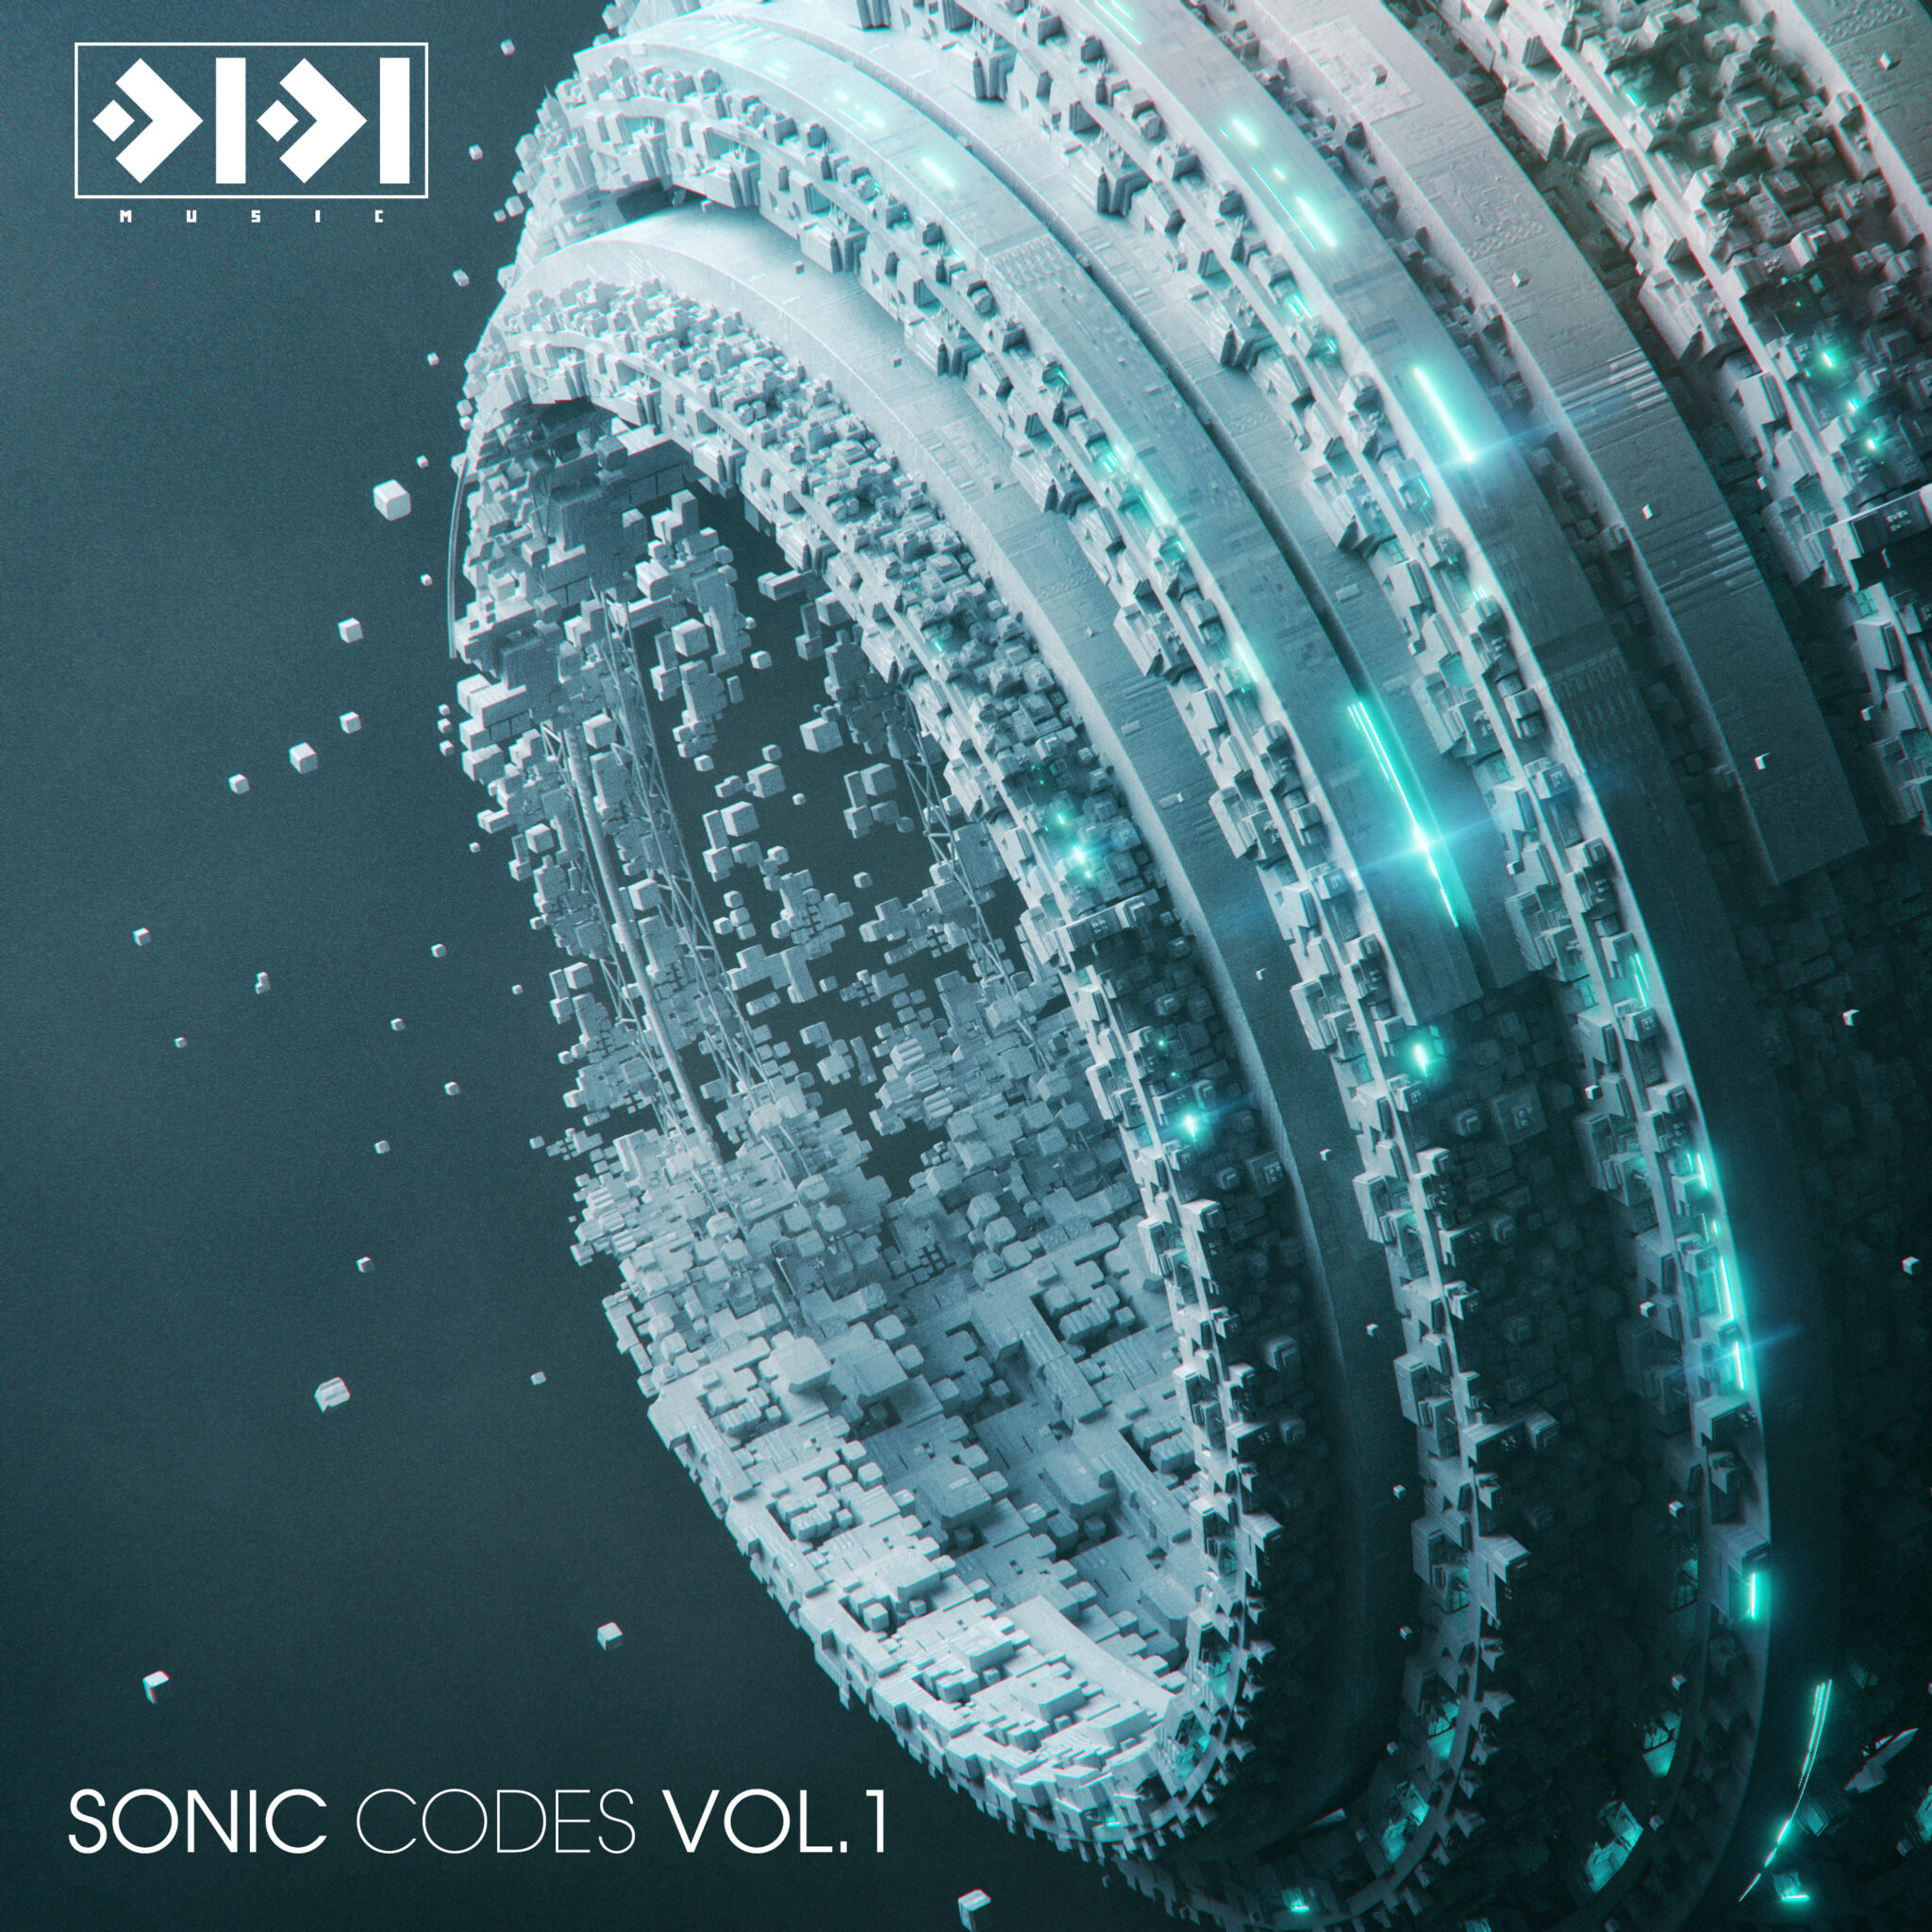 Sonic Codes Vol.1 - 0101 MUSIC